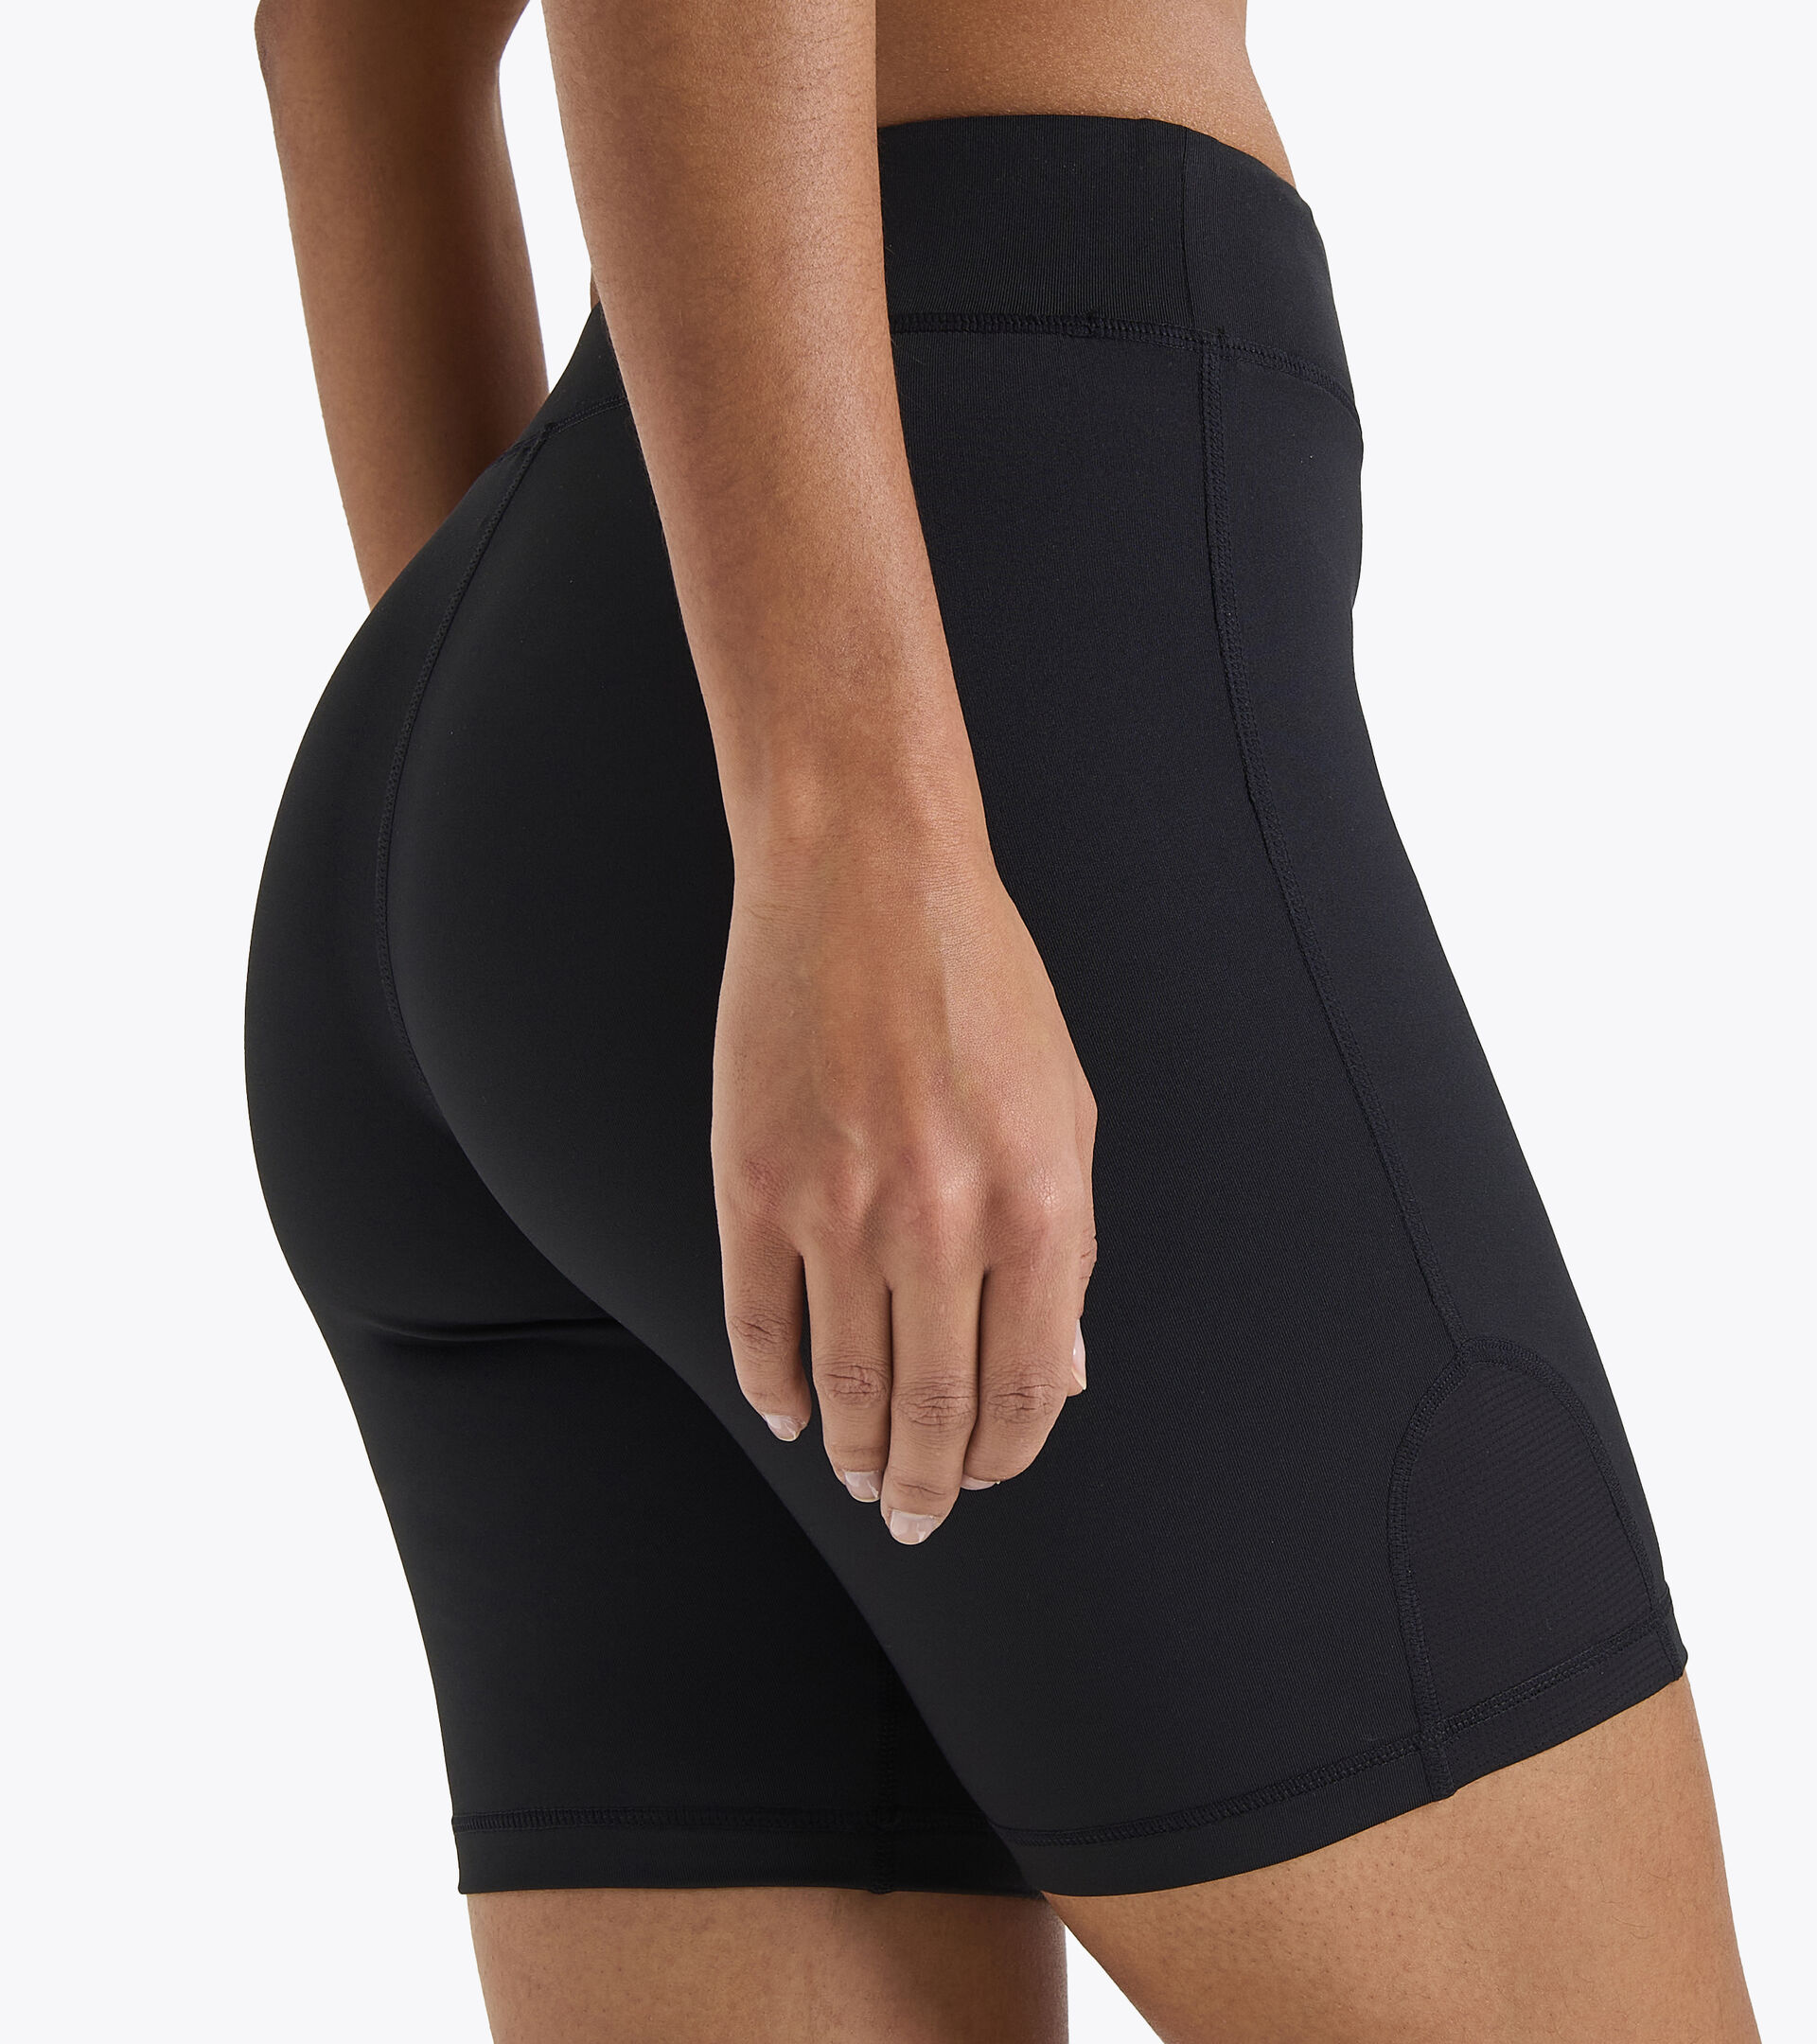 L. SHORT TIGHTS Running shorts - Women - Diadora Online Store CA